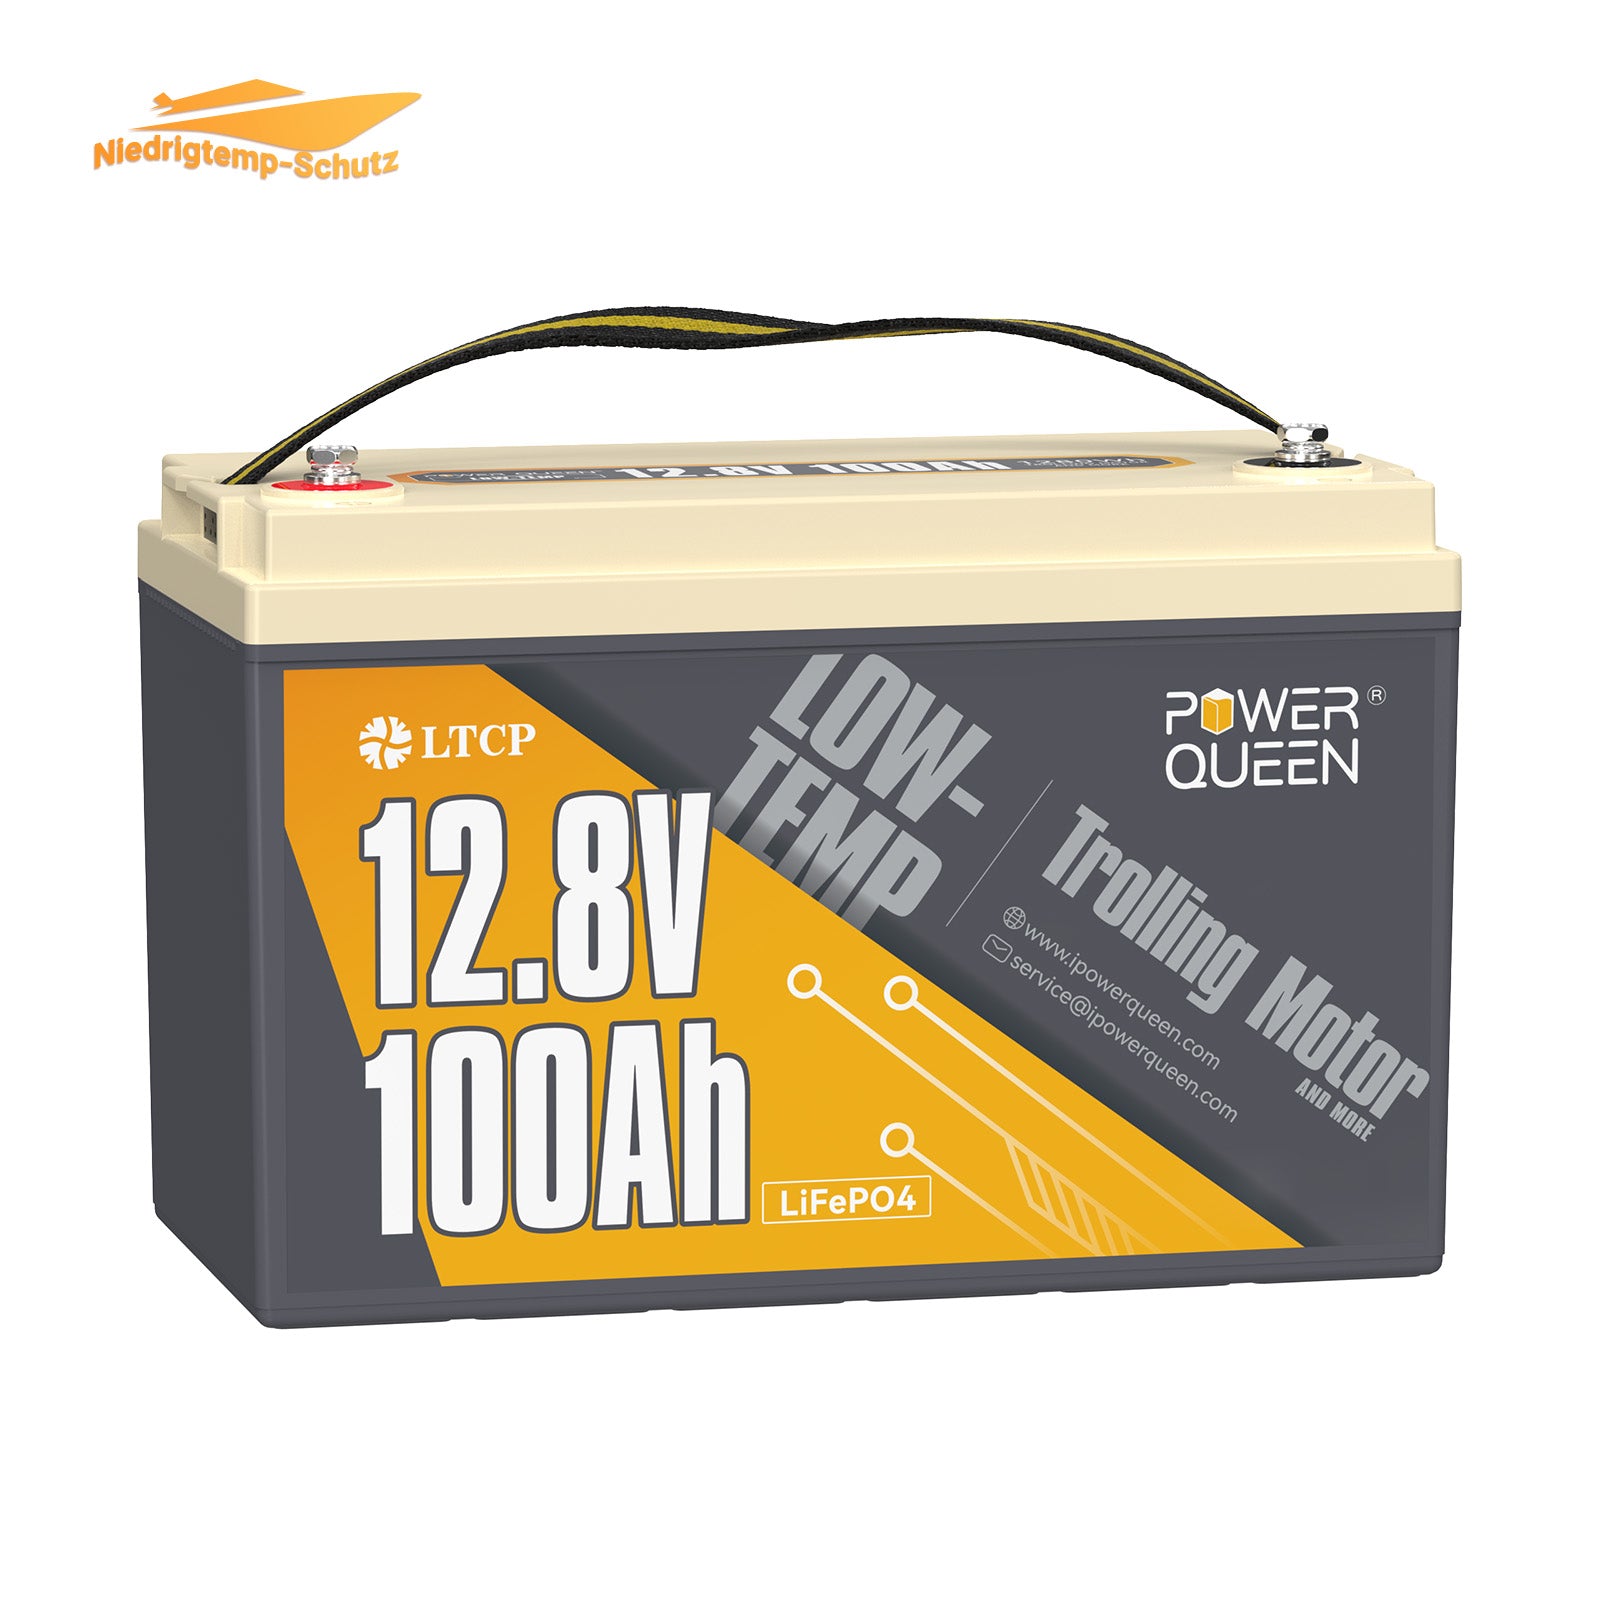 Power Queen 12.8V 100Ah low temp LiFePO4 battery, trolling motor battery